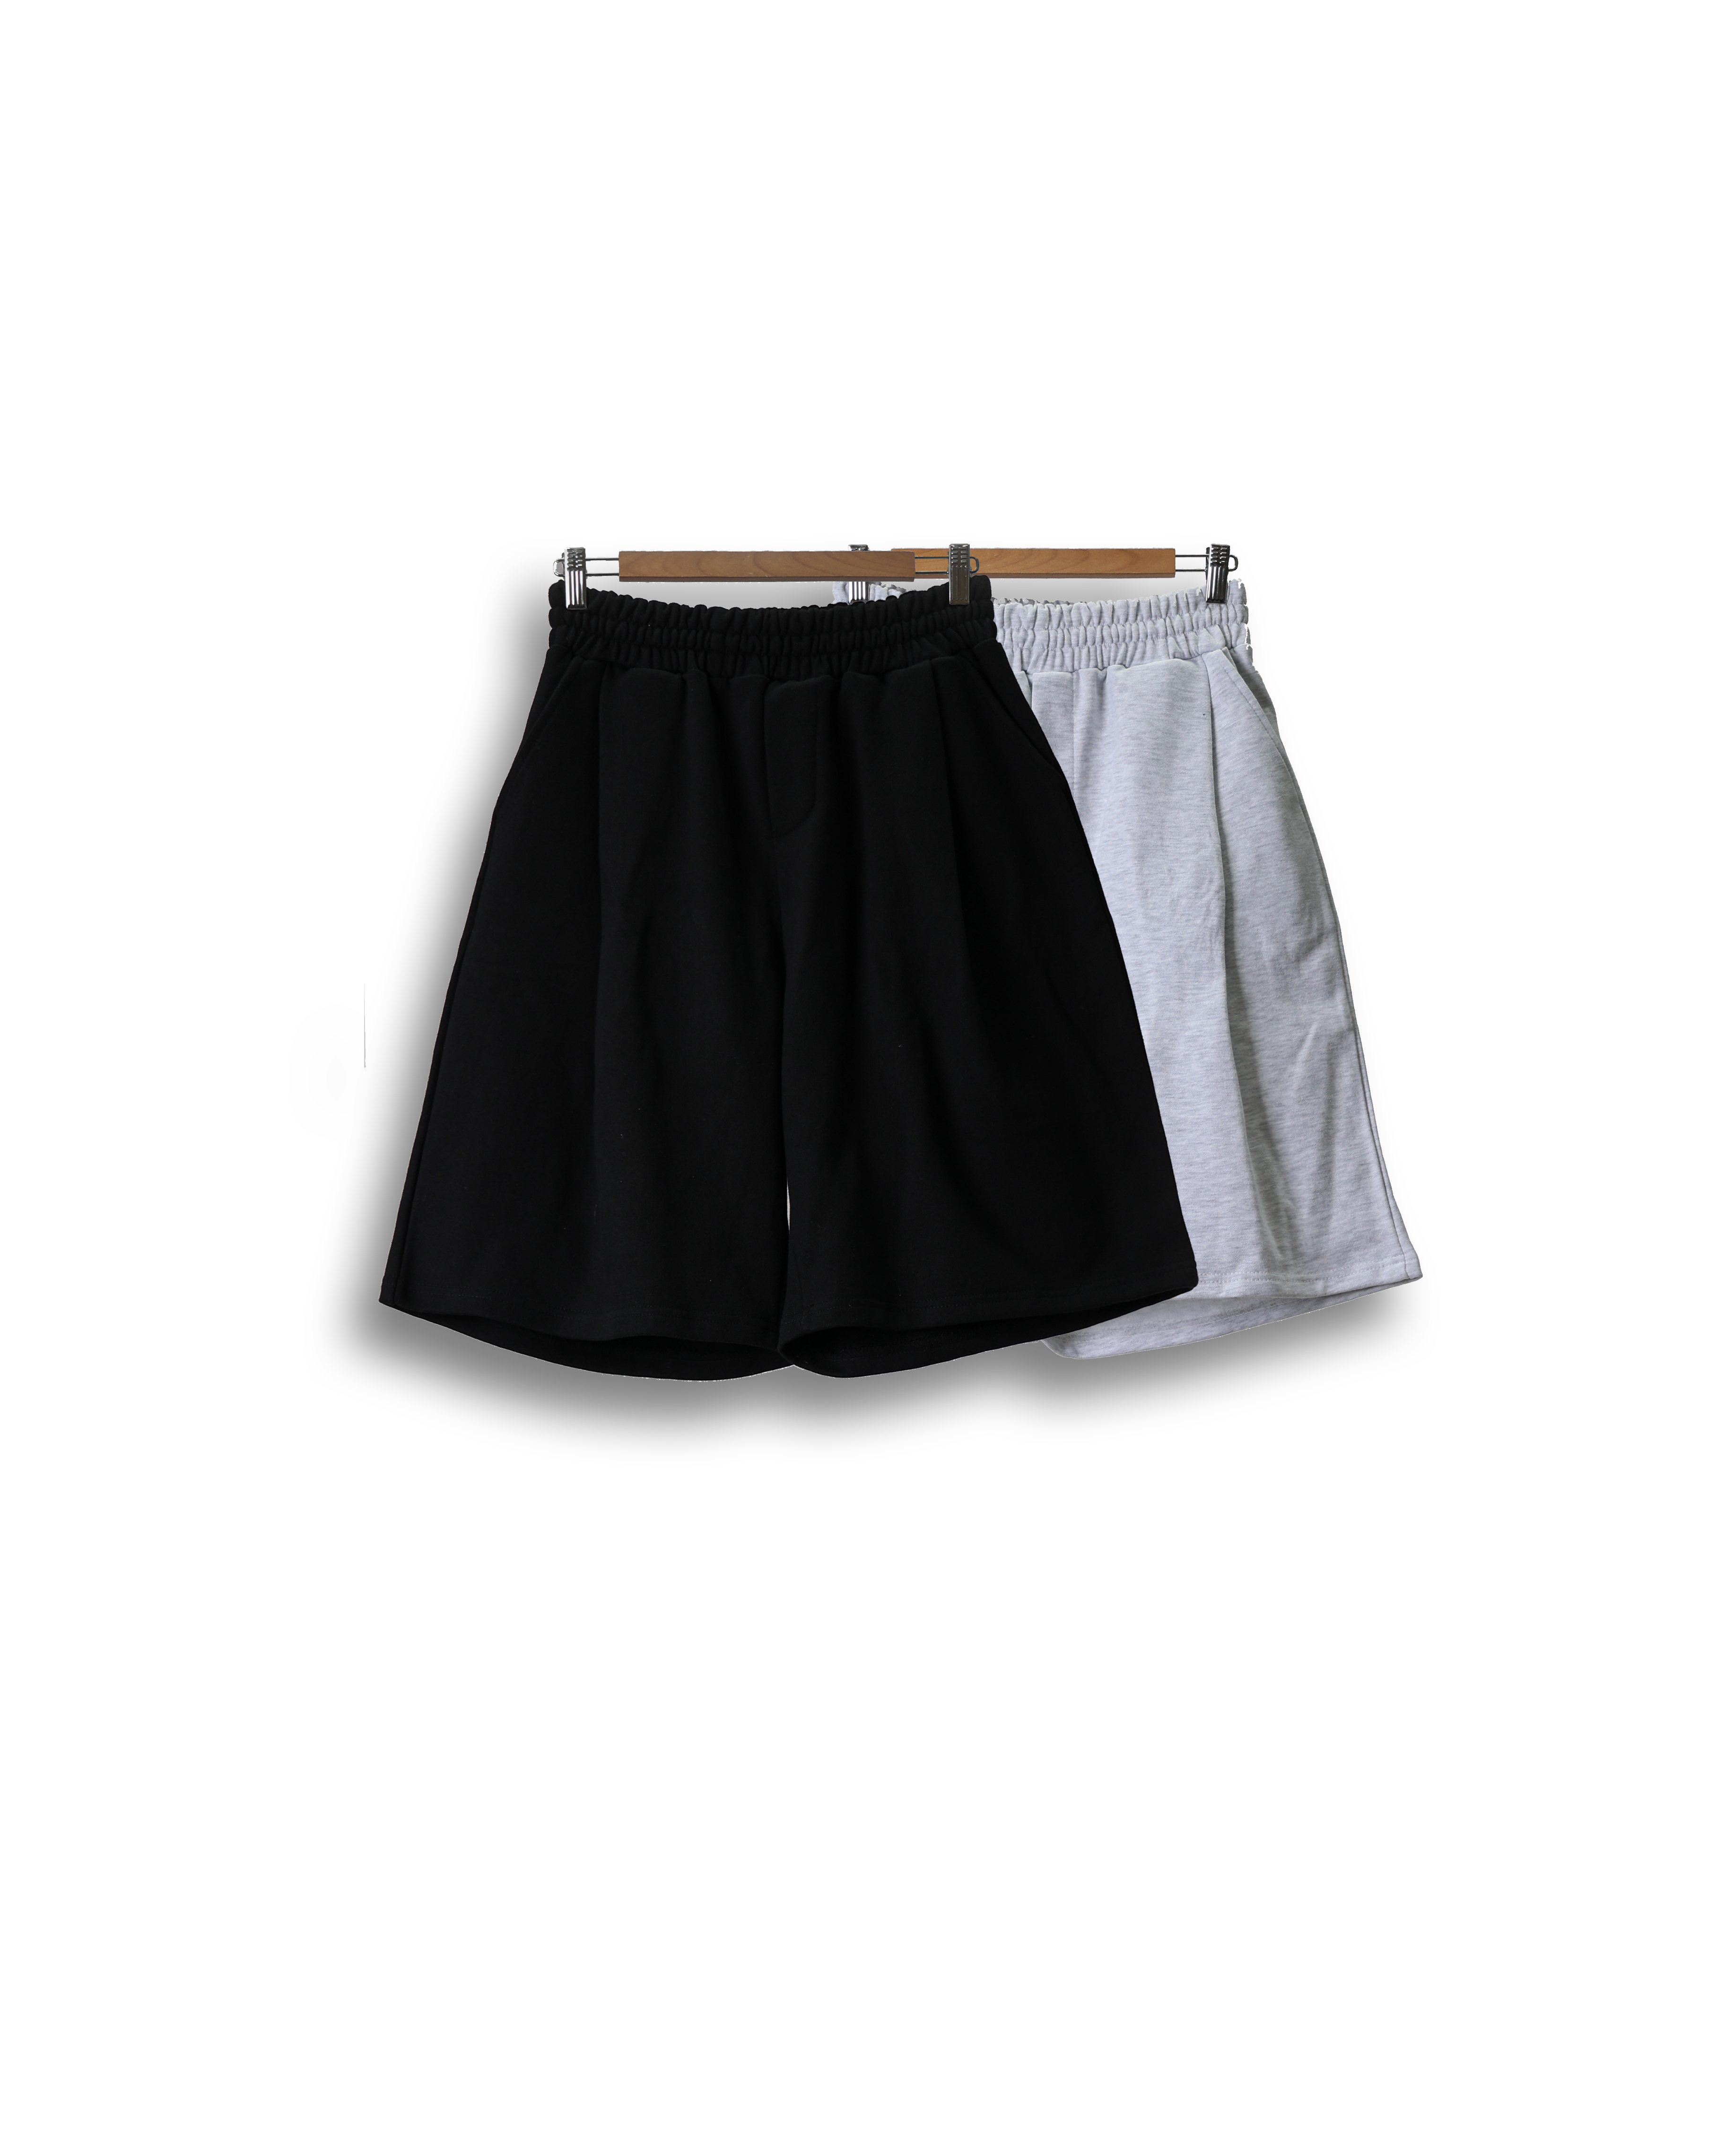 ALLVER Covers Boxer FC Half Sweat Pants (Balck/Light Gray)